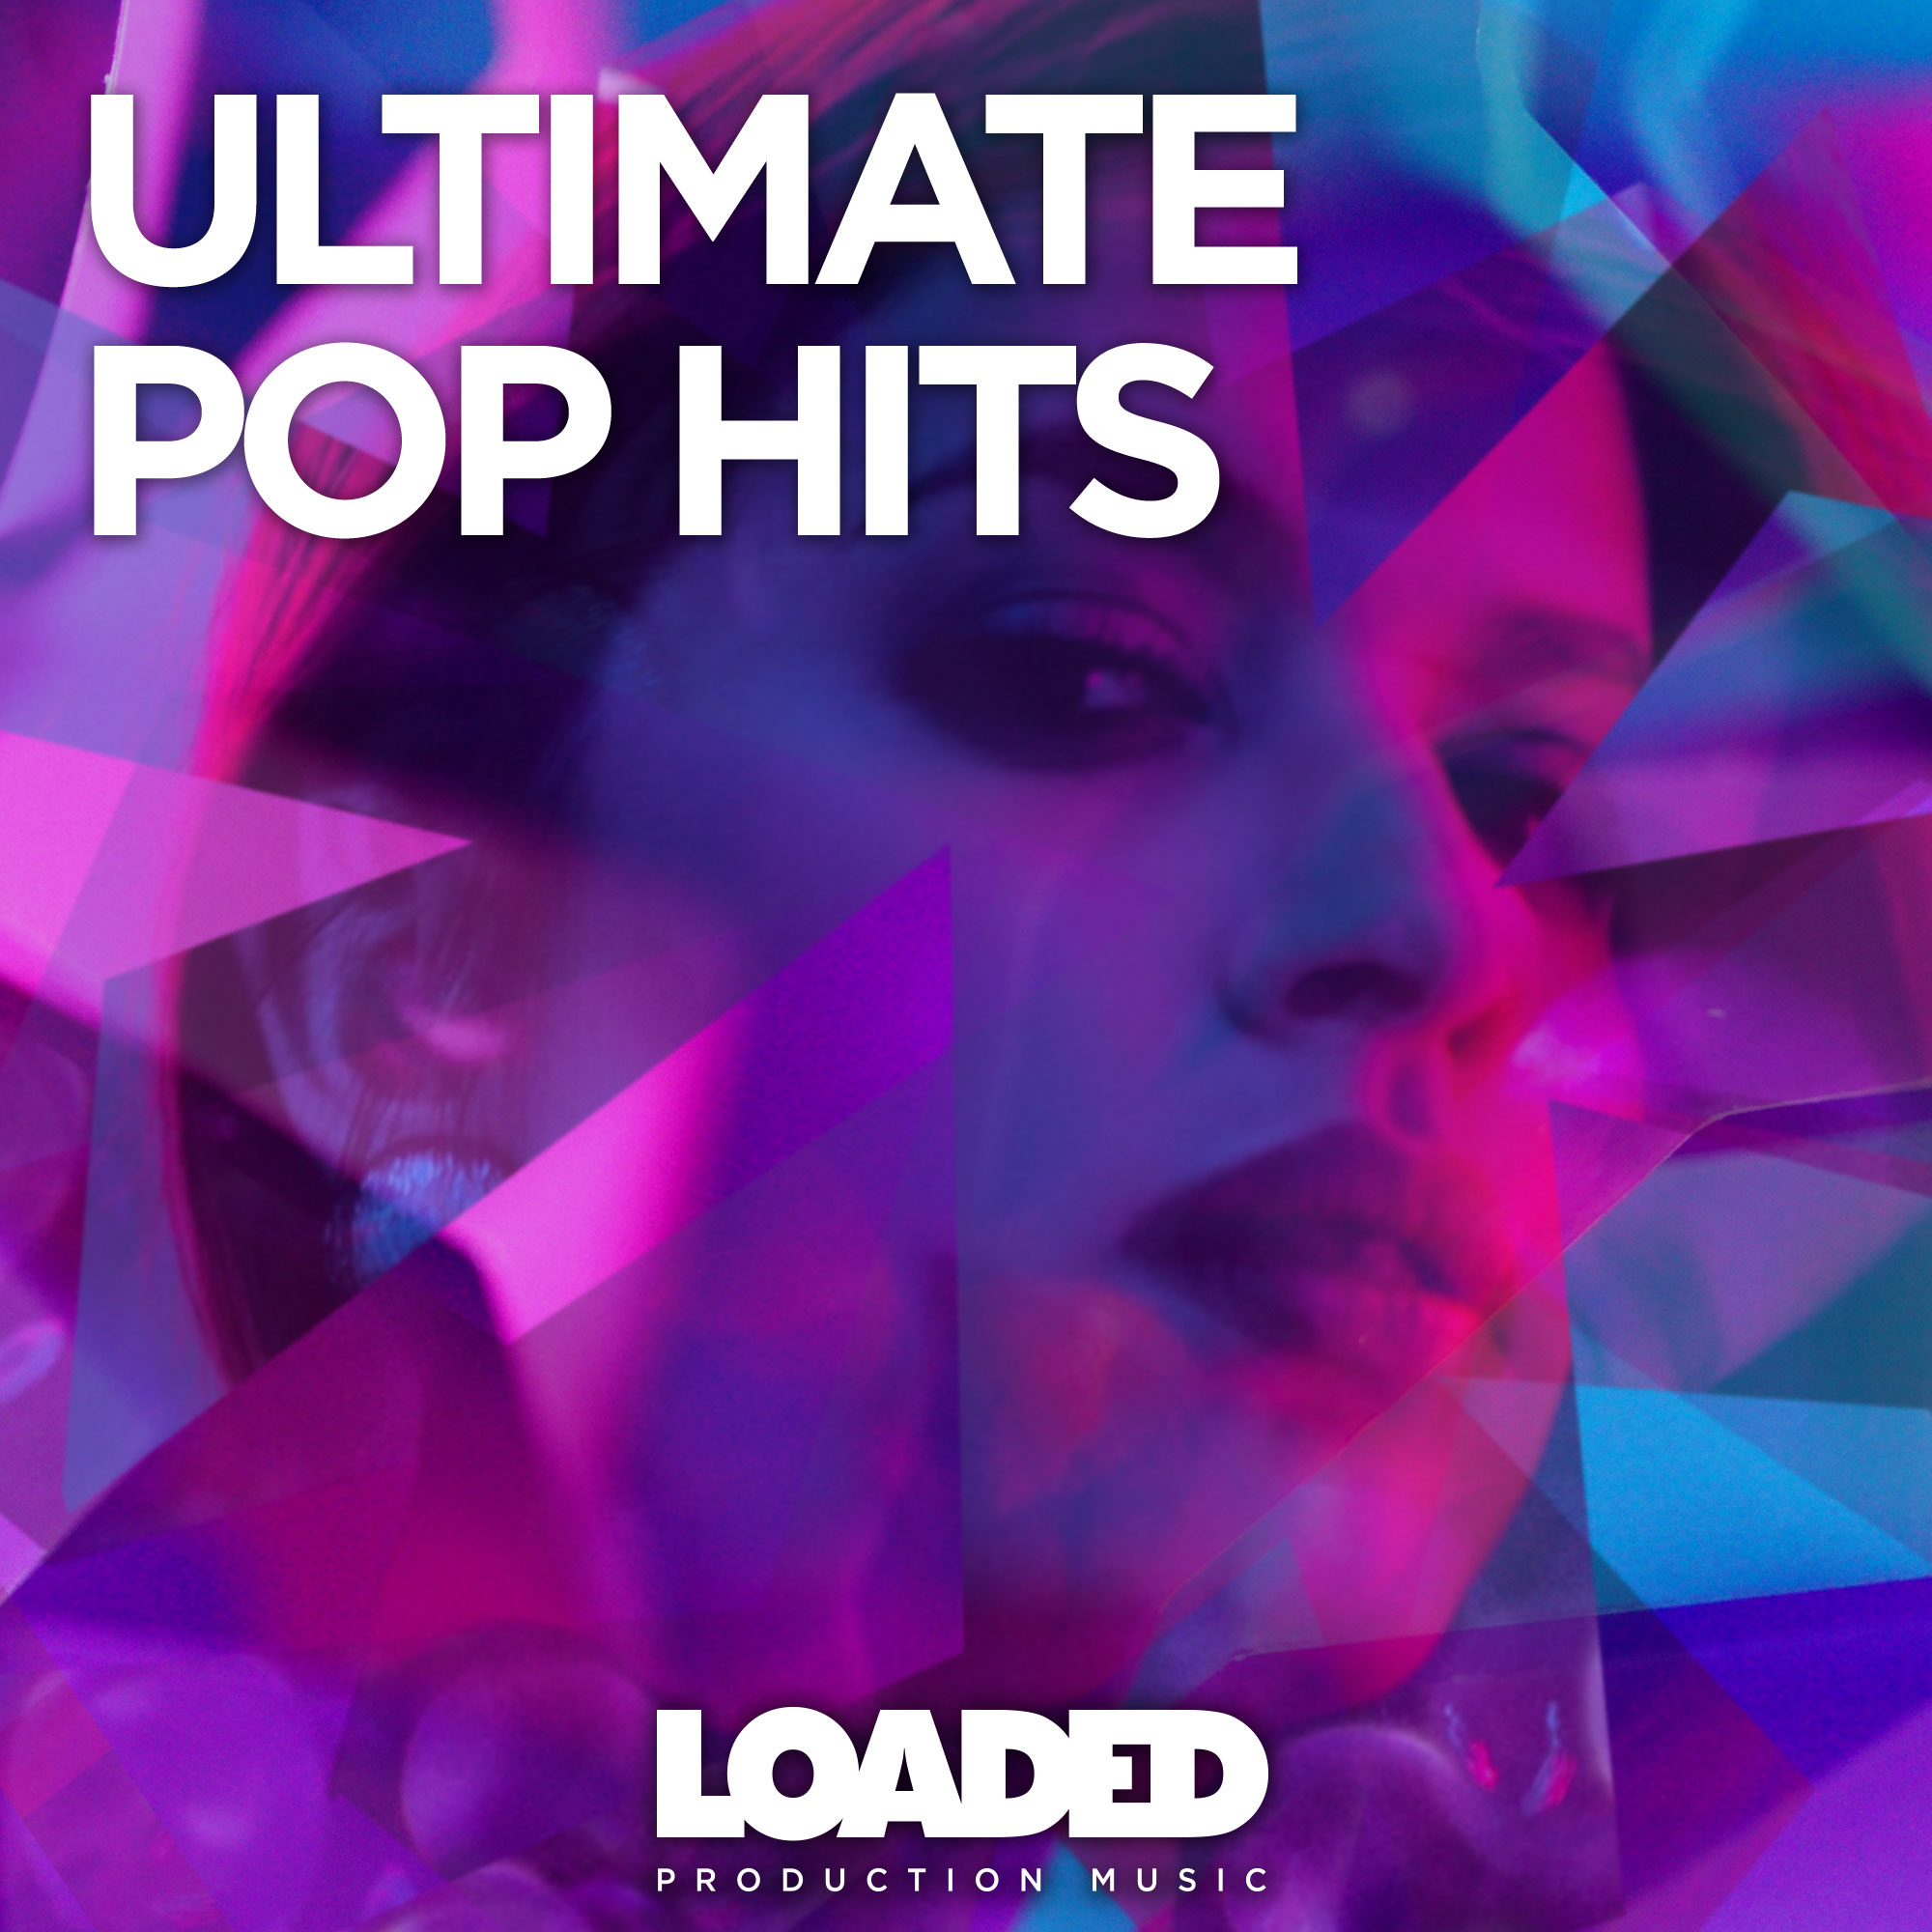 LPM 049 - Ultimate Pop Hits - Album Cover